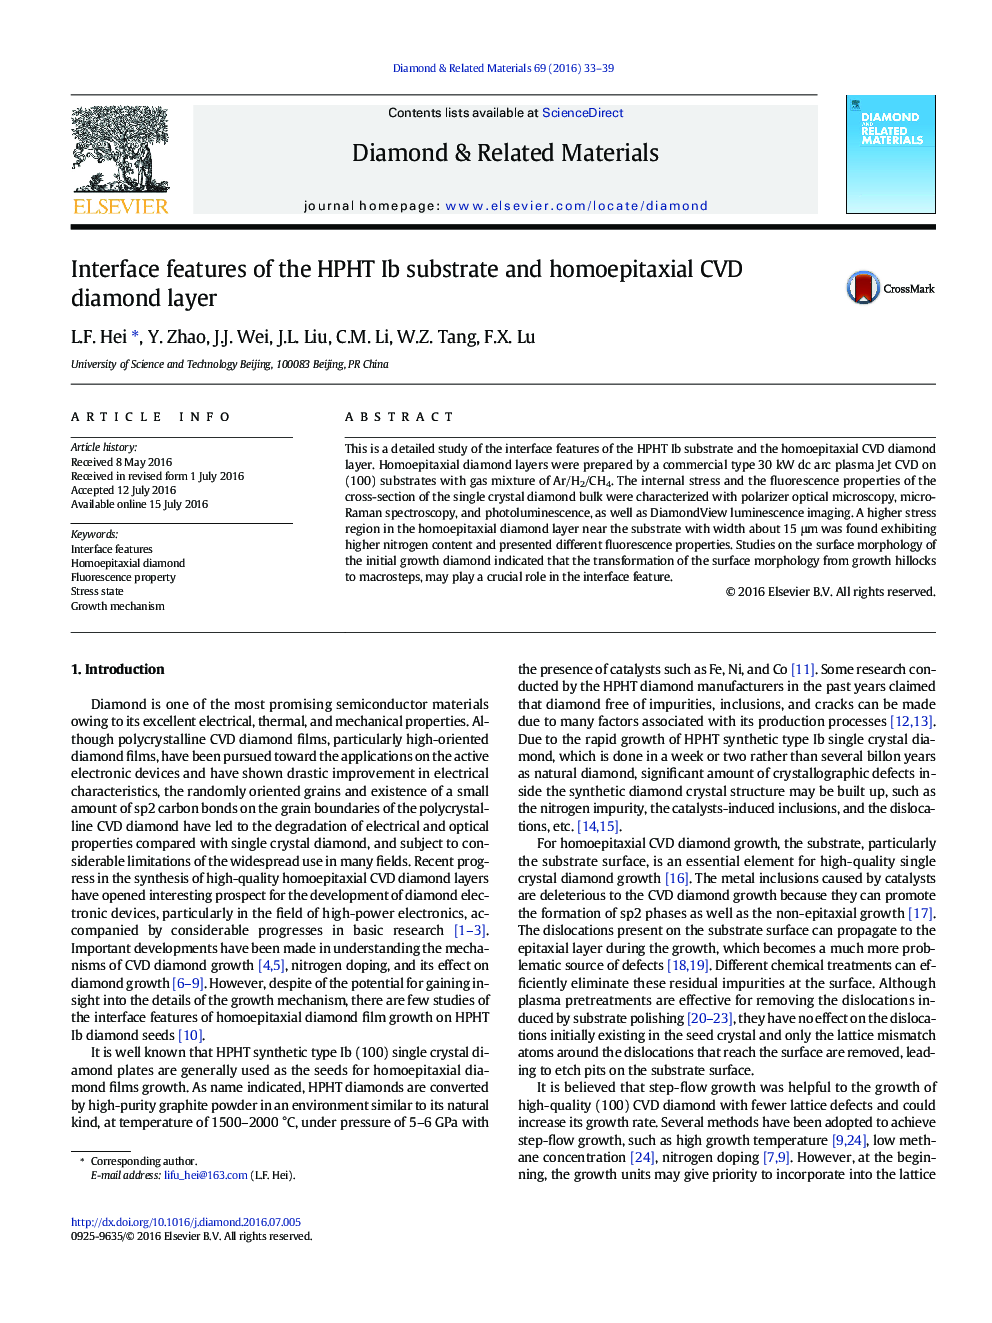 ویژگی های رابط بستر HPHT IB و لایه الماس CVD رونشانی همگون